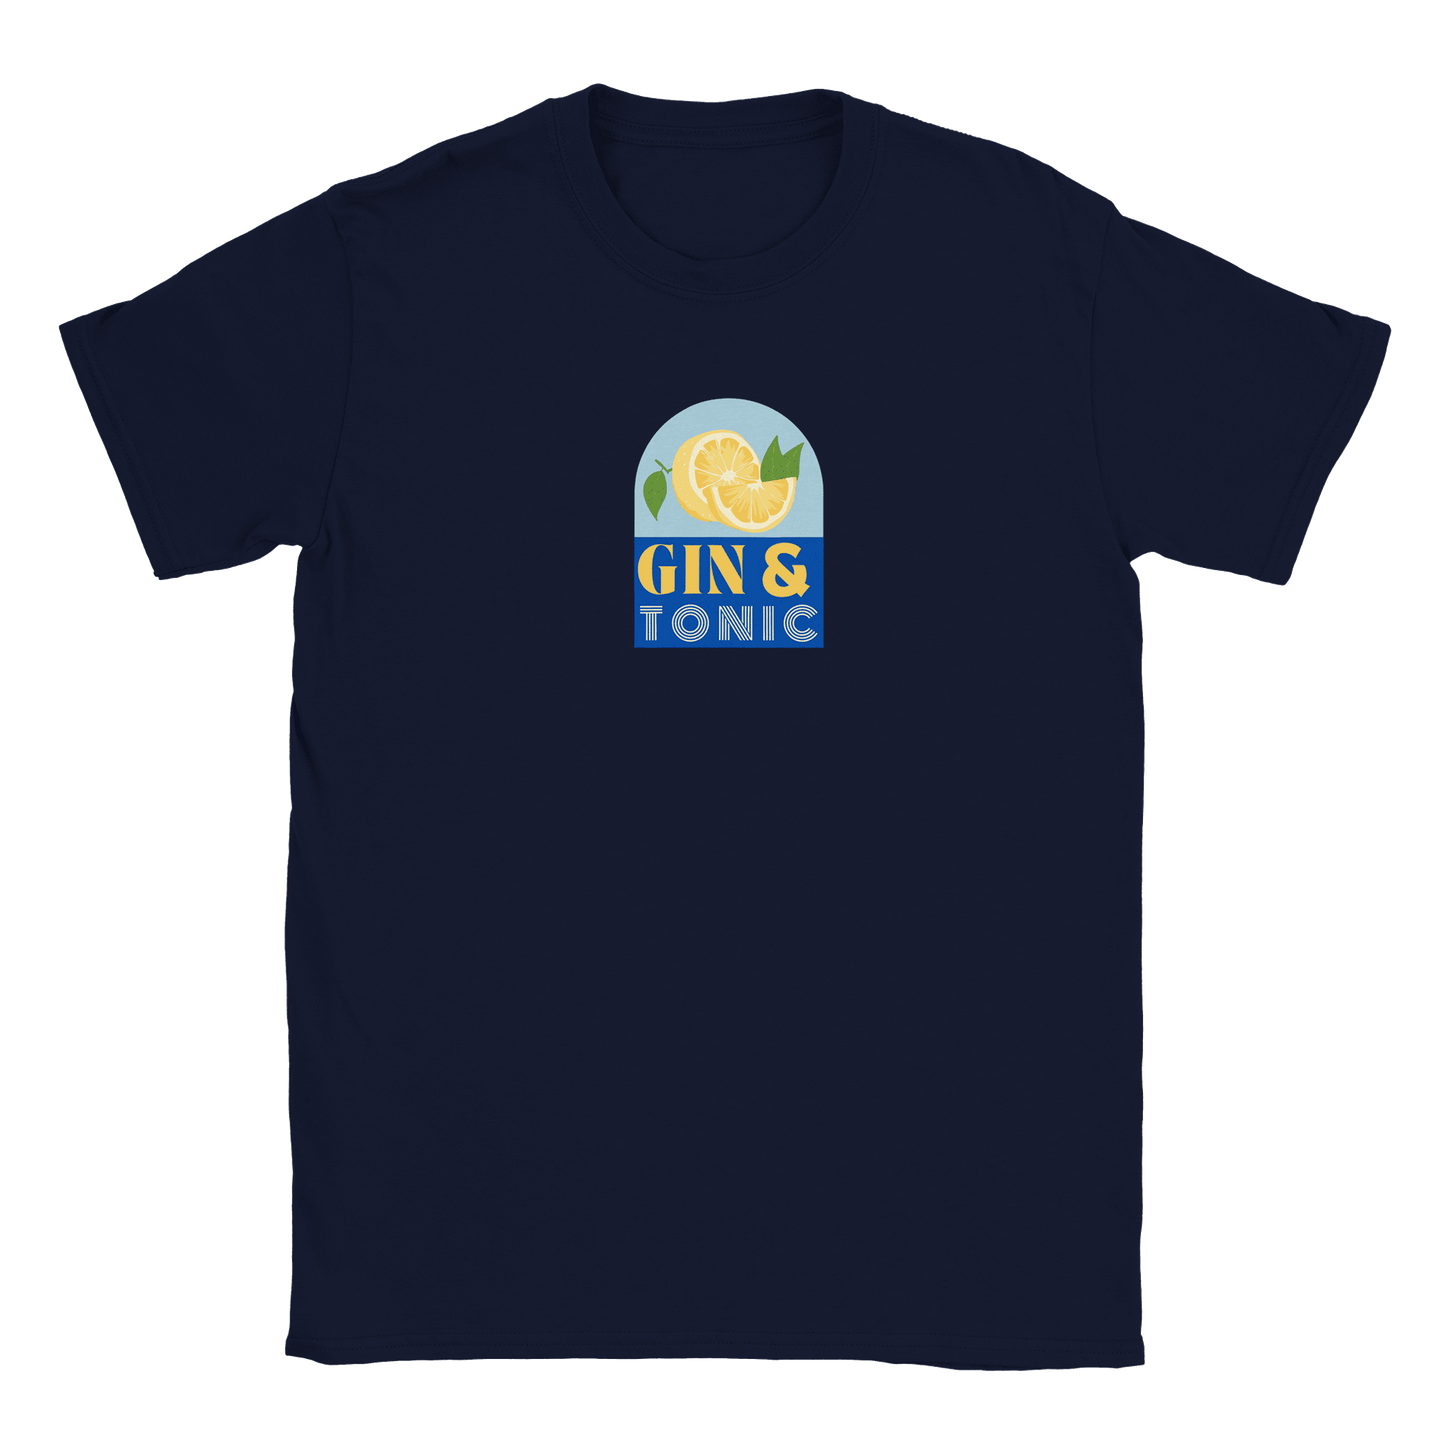 Gin & Tonic - T-shirt Marinblå